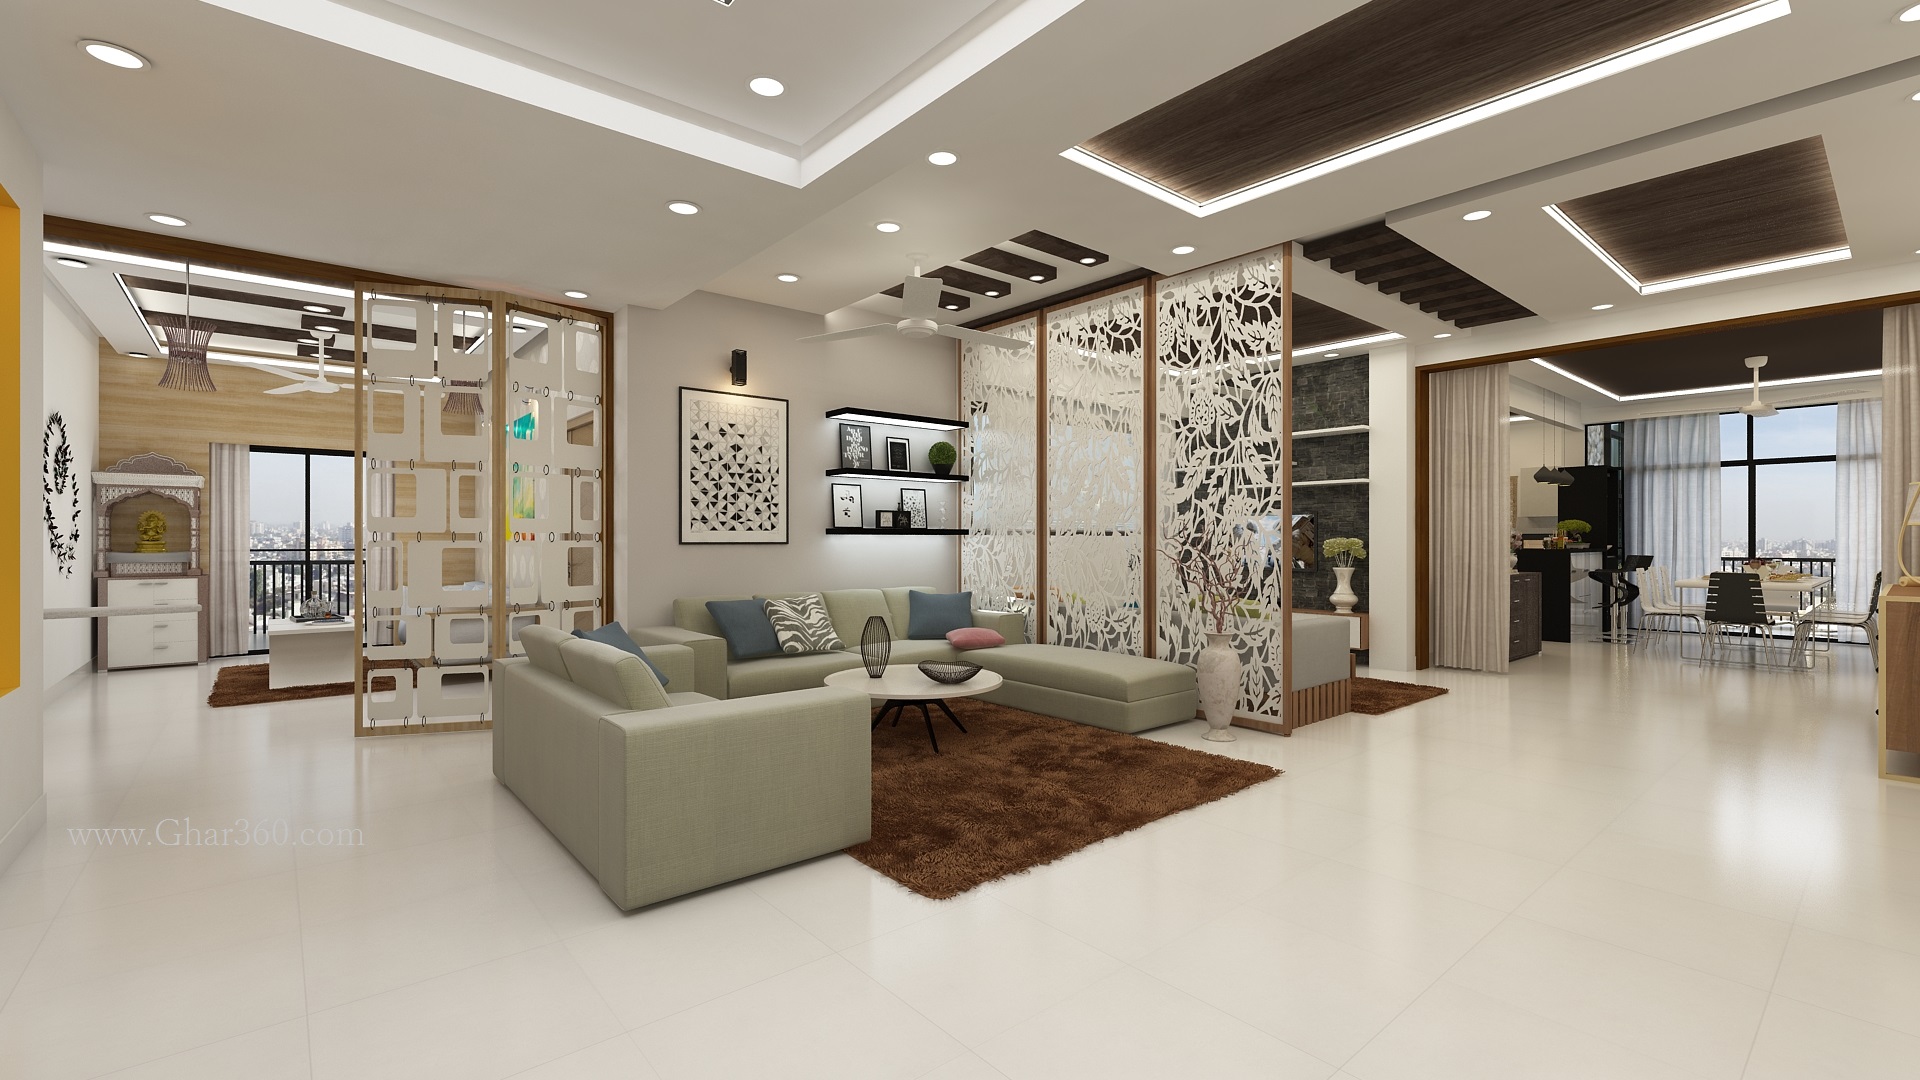 The Best Living Room Interior Design Bangalore - Best Home Design